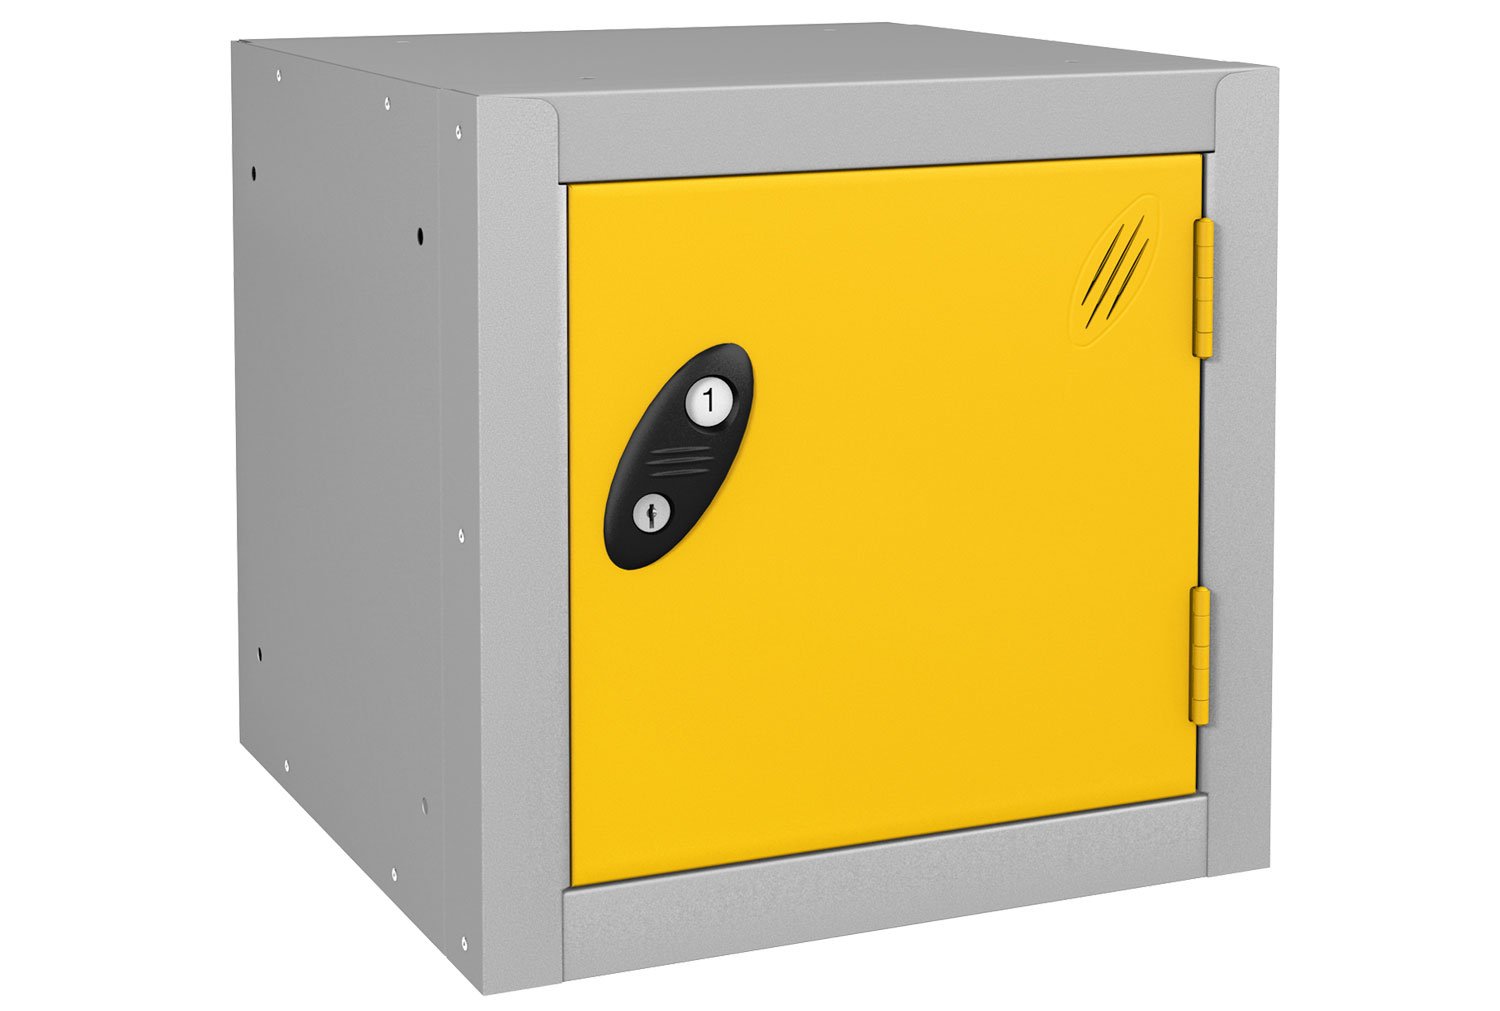 Probe Cube Lockers, 46wx46dx46h (cm), Hasp Lock, Silver Body, Yellow